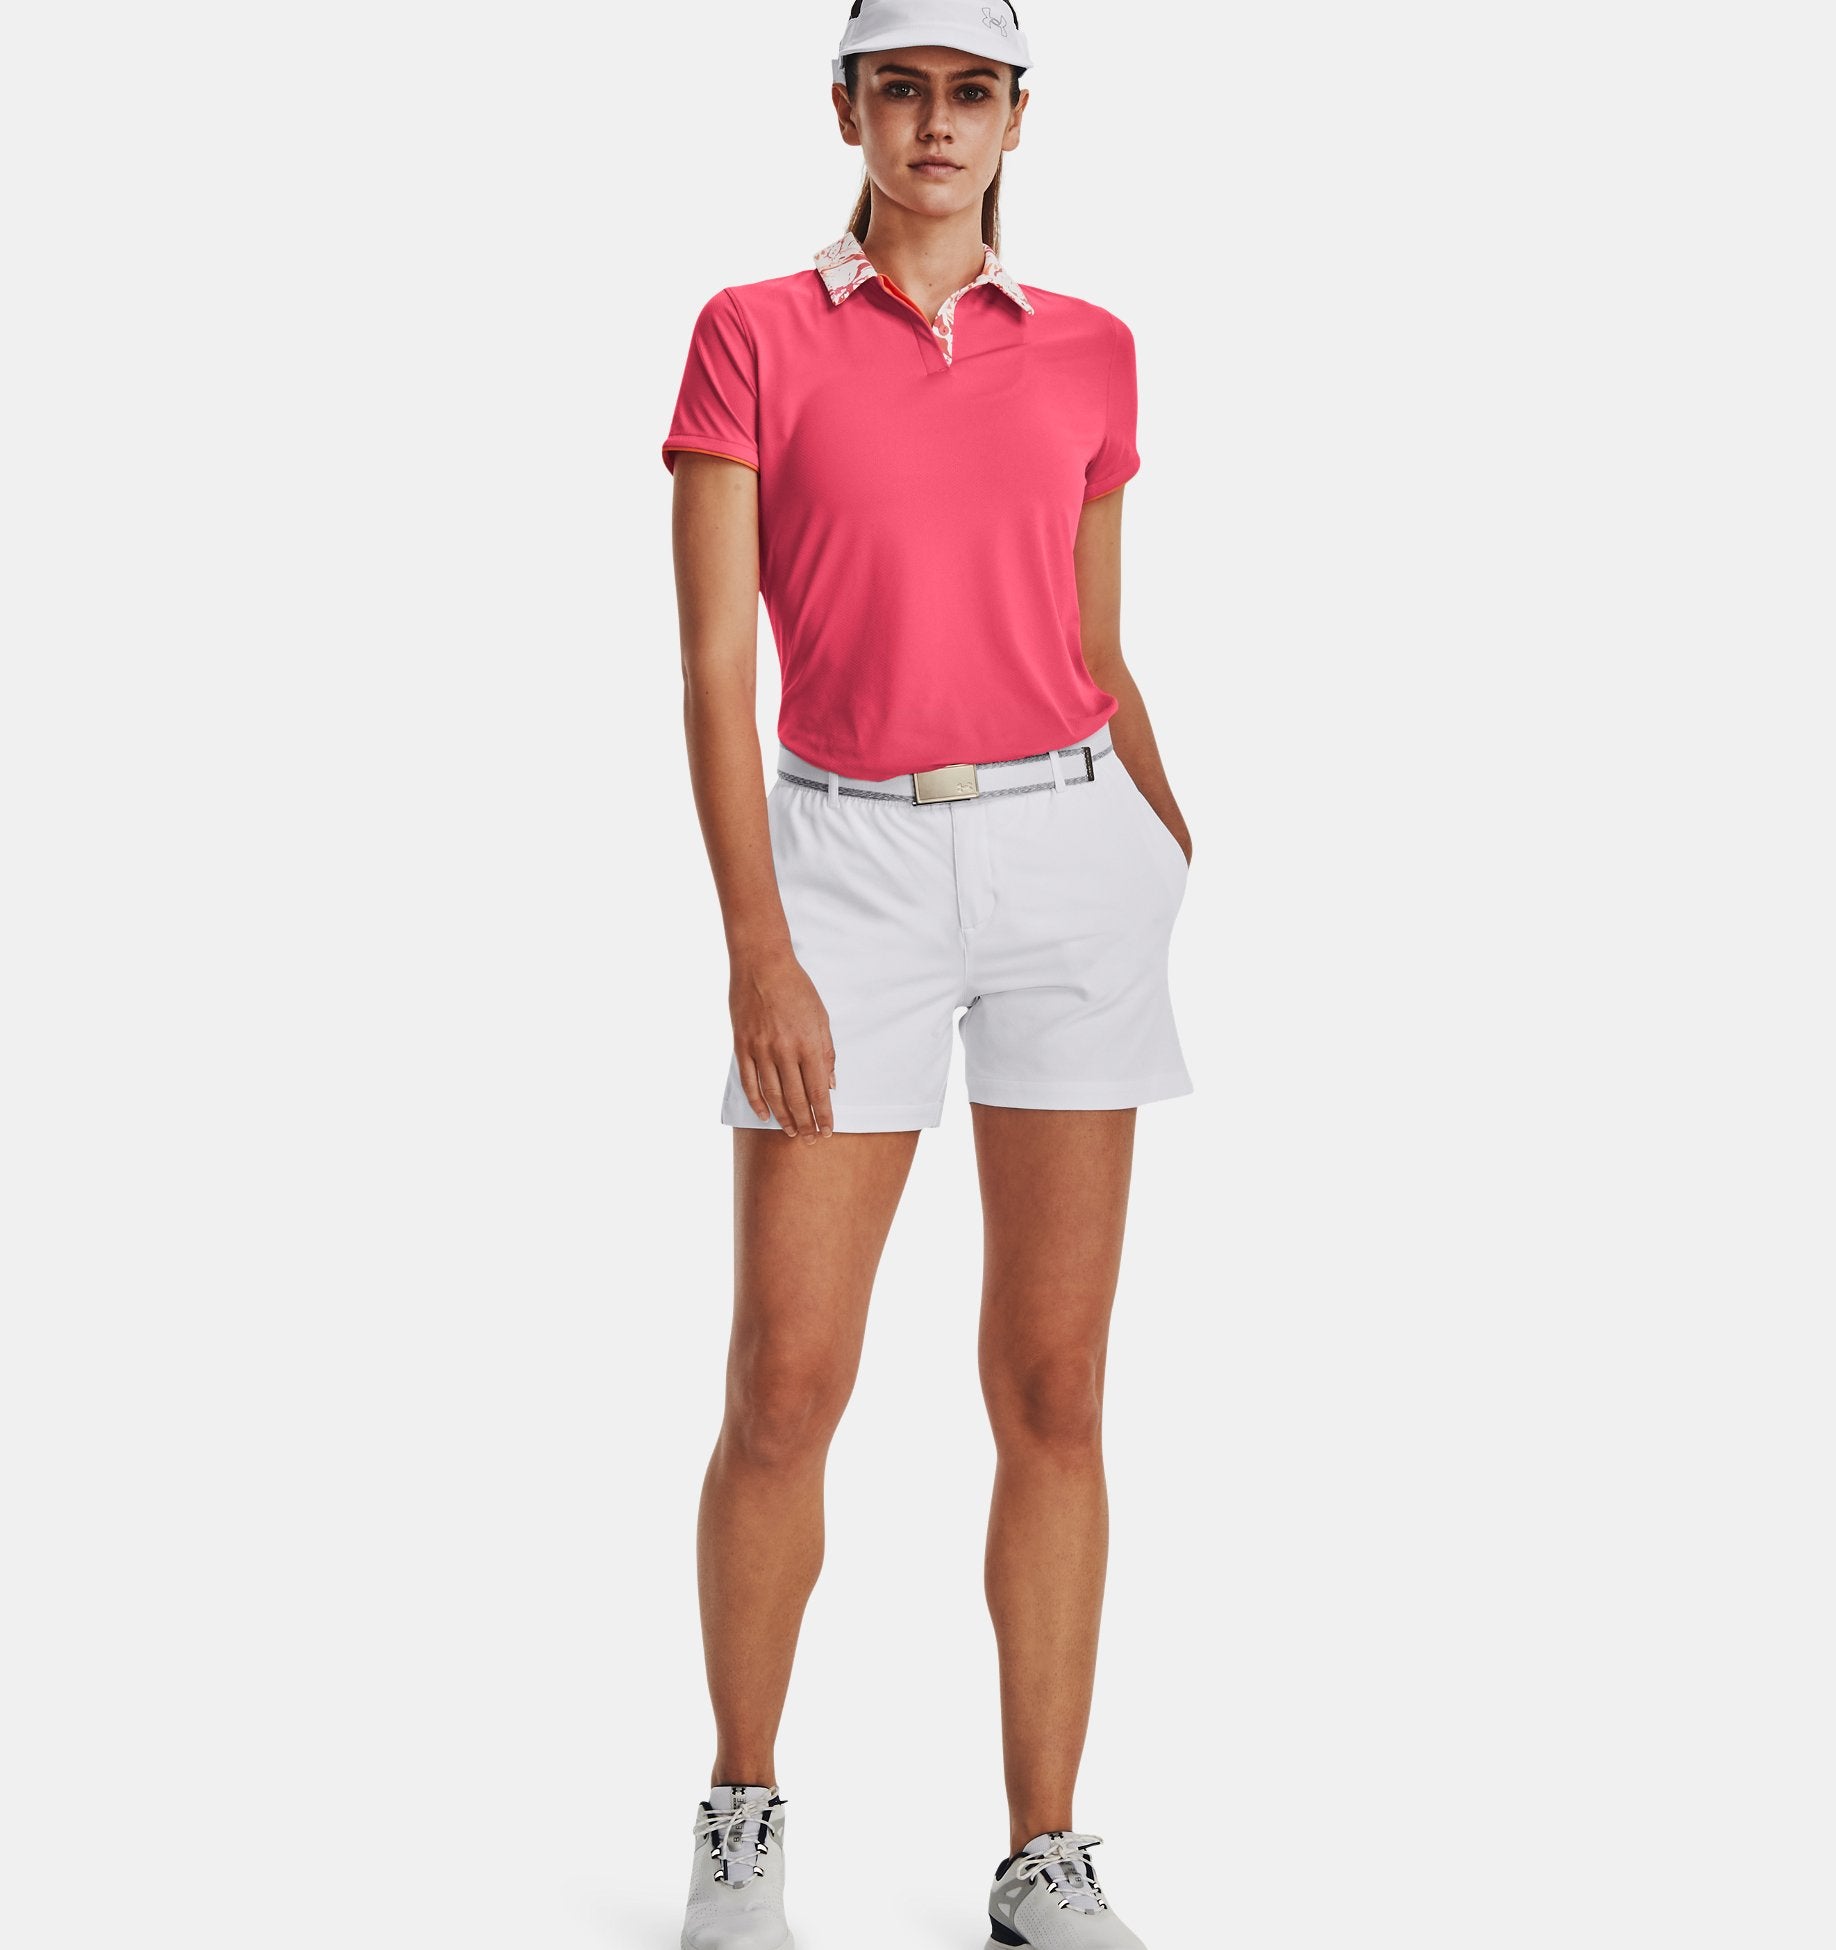 polo-golf-femme-ua-iso-chill-rose-UNDER-ARMOUR-MAHEU-GO-SPORT-1377333-03